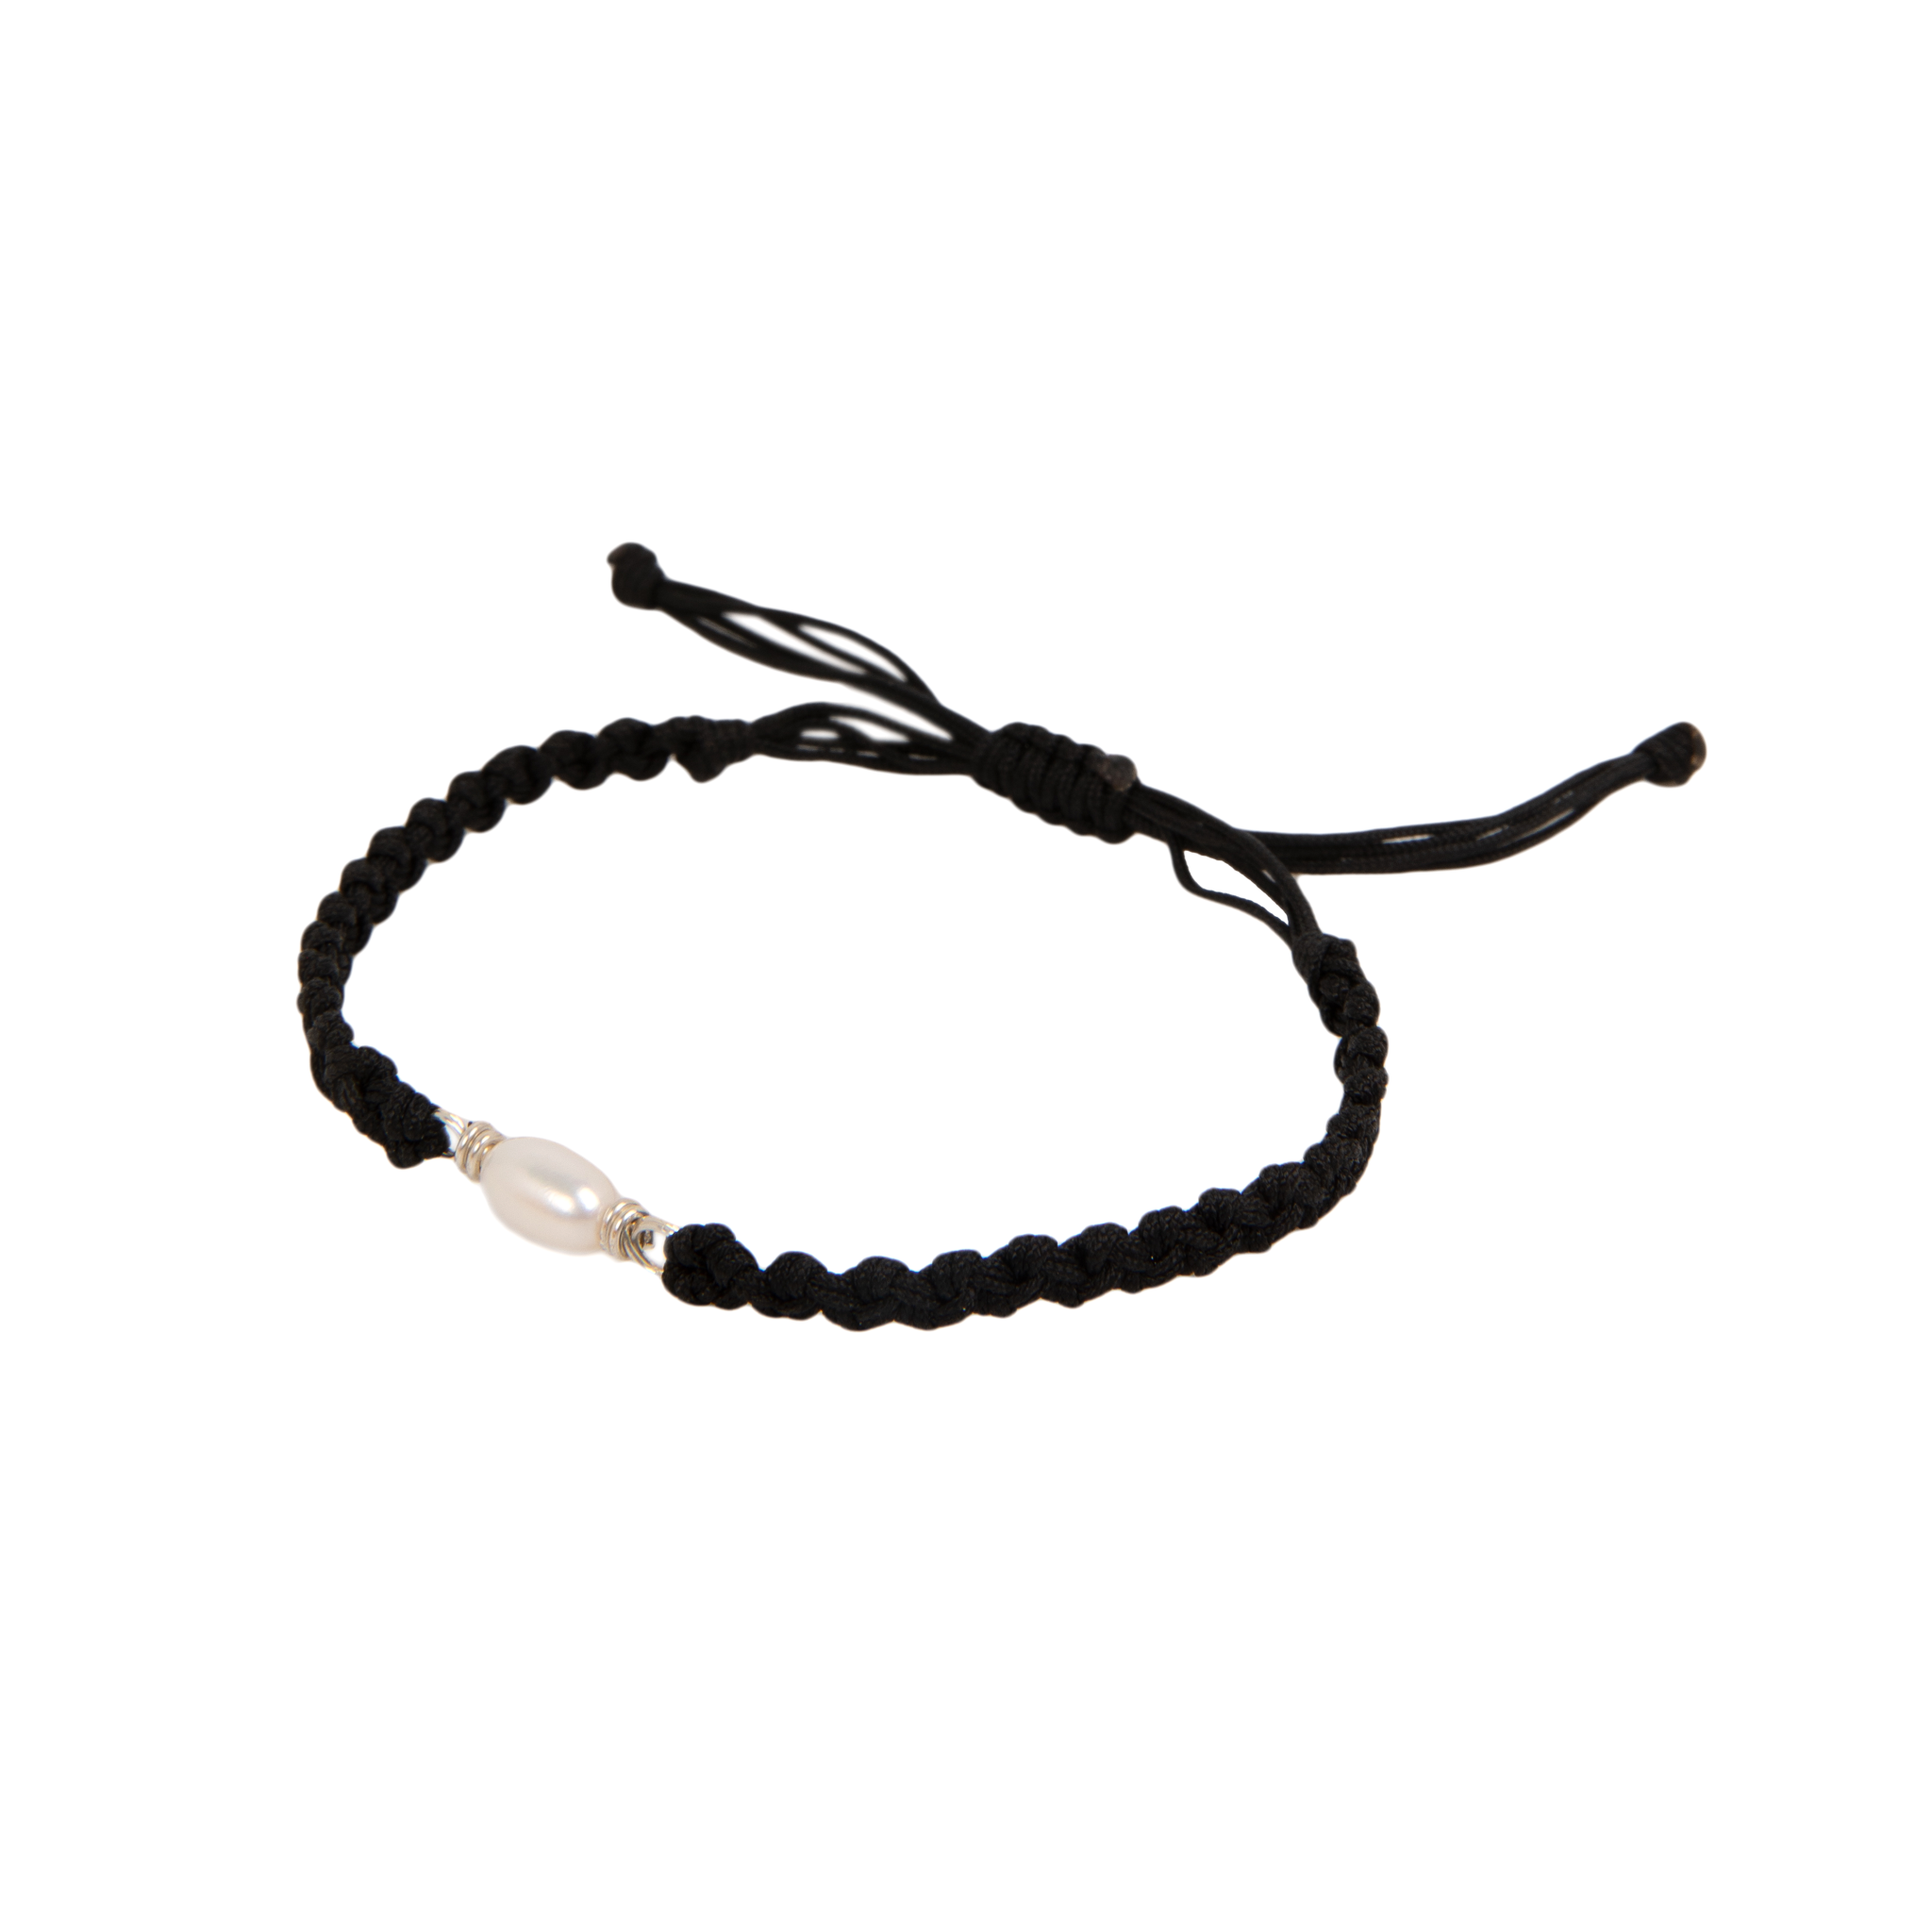 Handmade Friendship Bracelet #1 (Black Thread) - Pearl & Sterling Silv